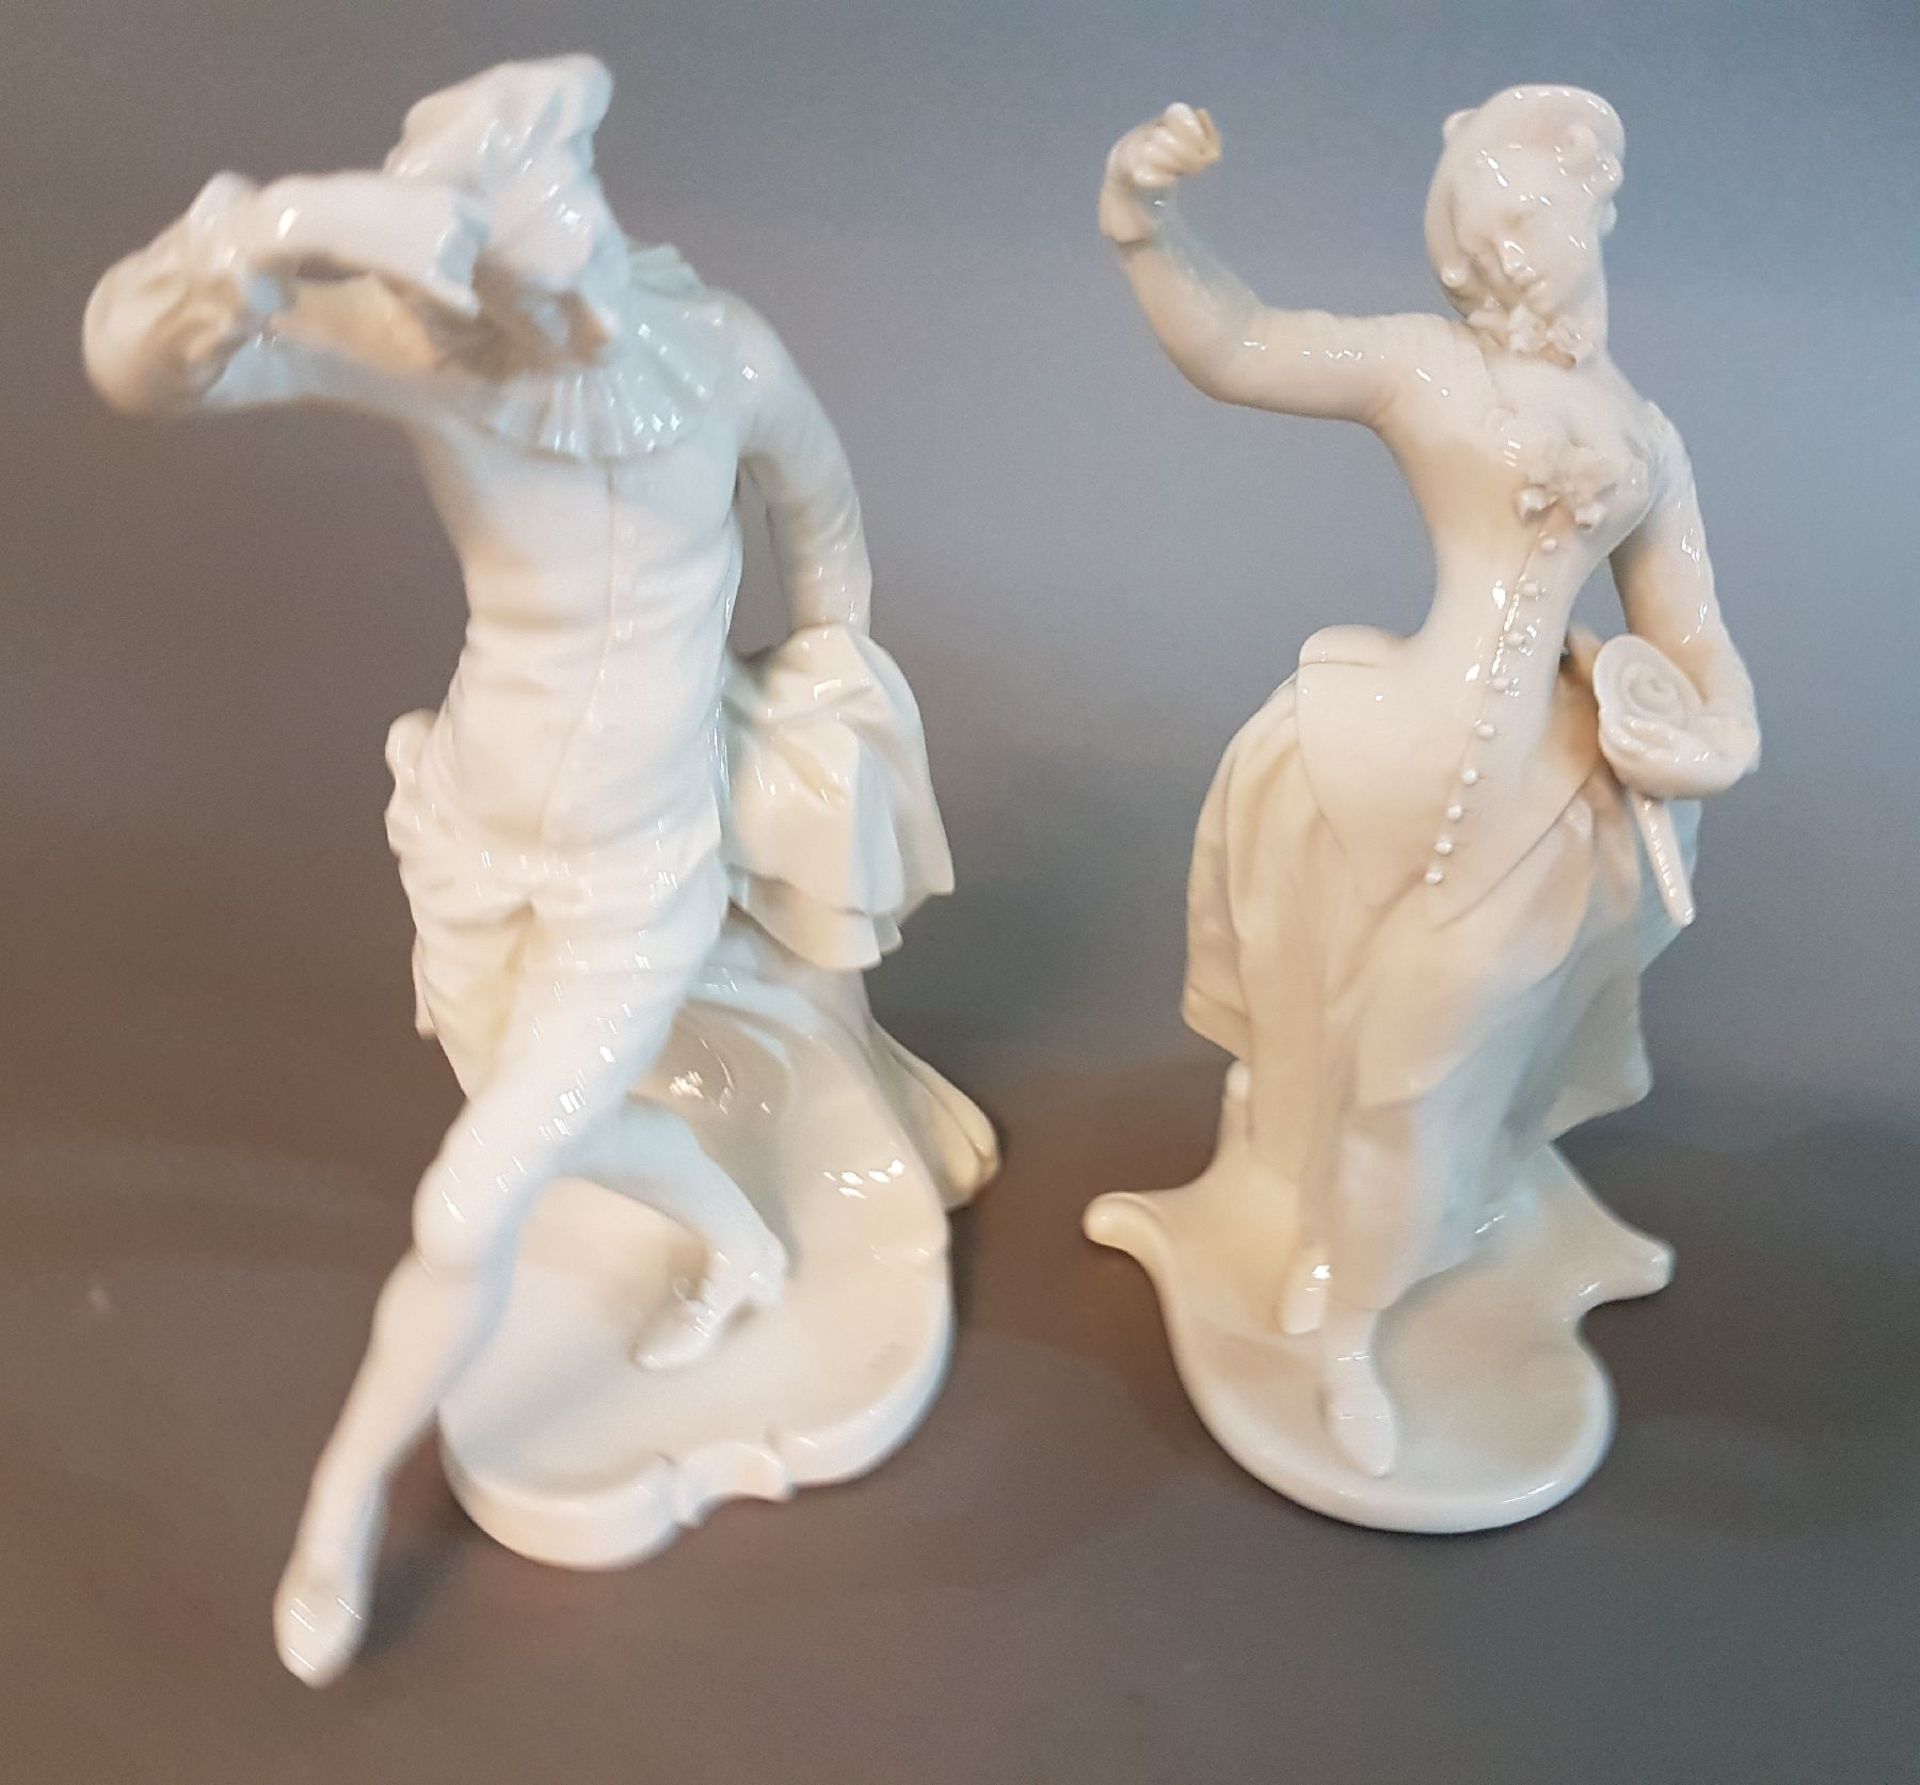 Zwei Porzellanfiguren aus der Comedia dell'Arte, - Image 2 of 4